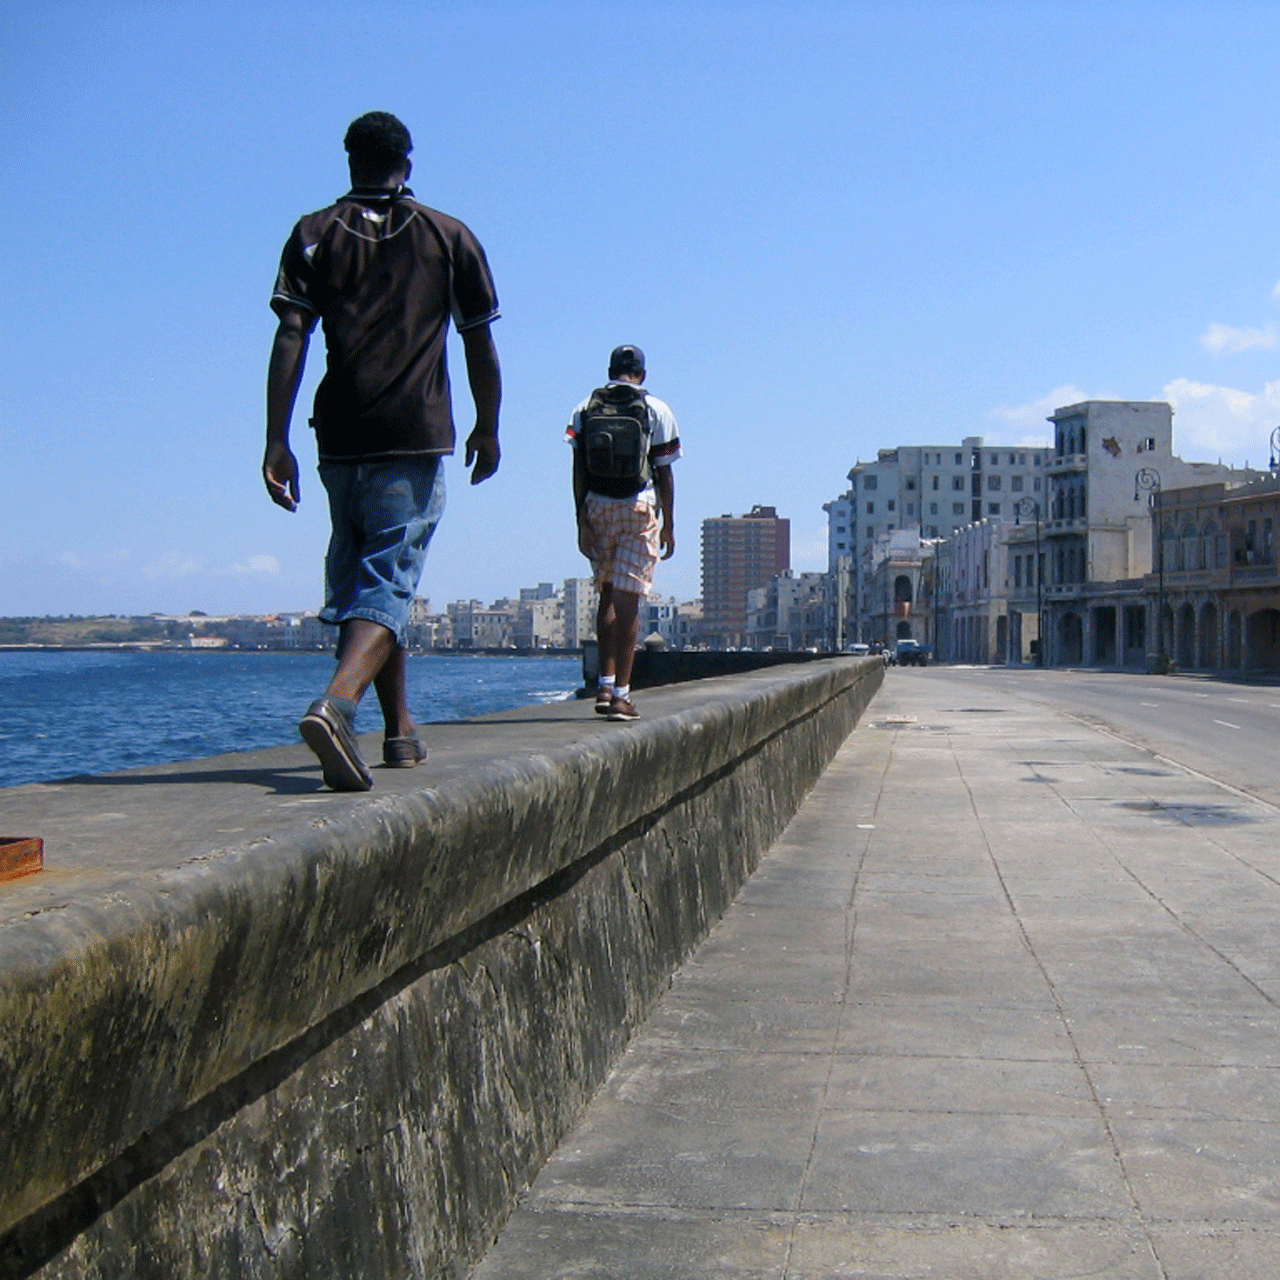 Two men walk along an embankment